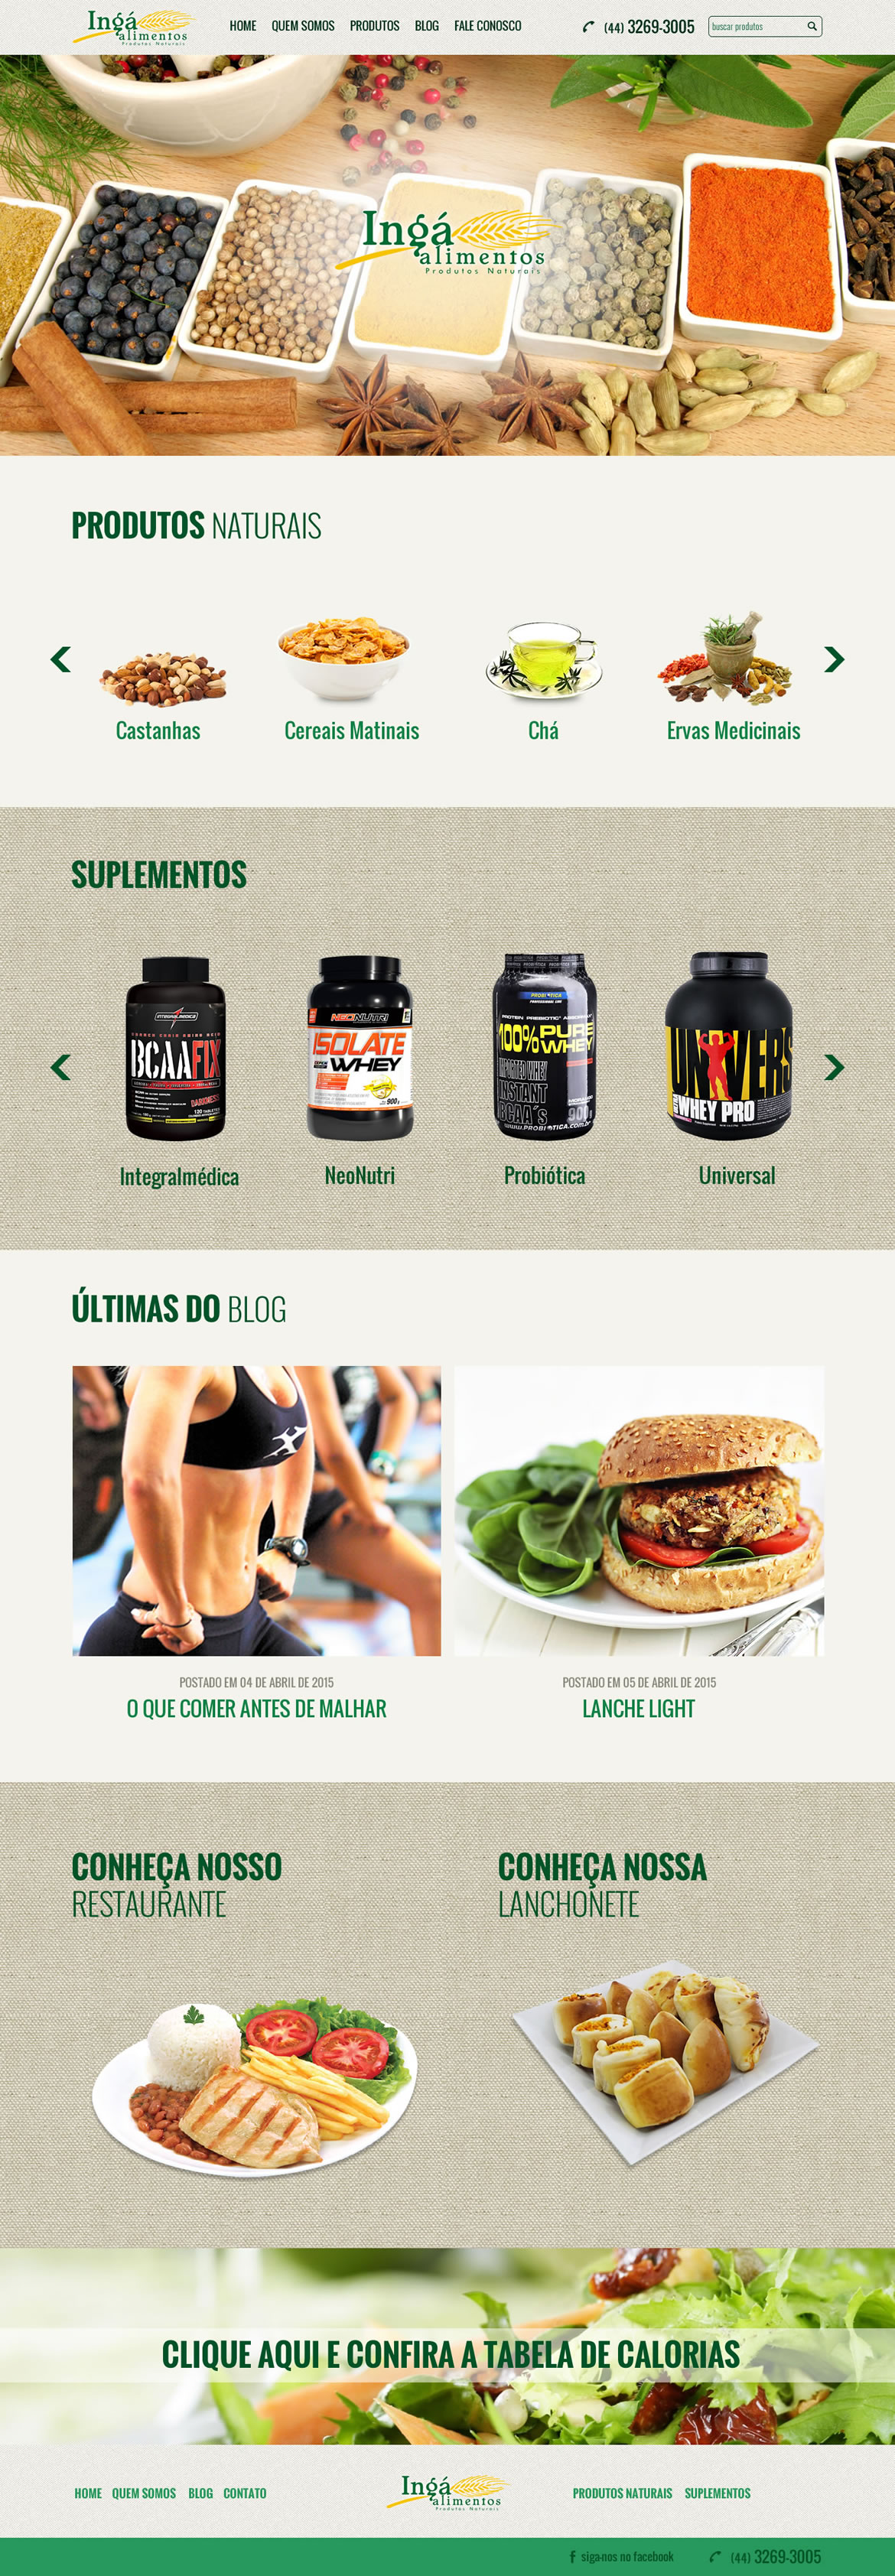 Homepage - Ingá Alimentos